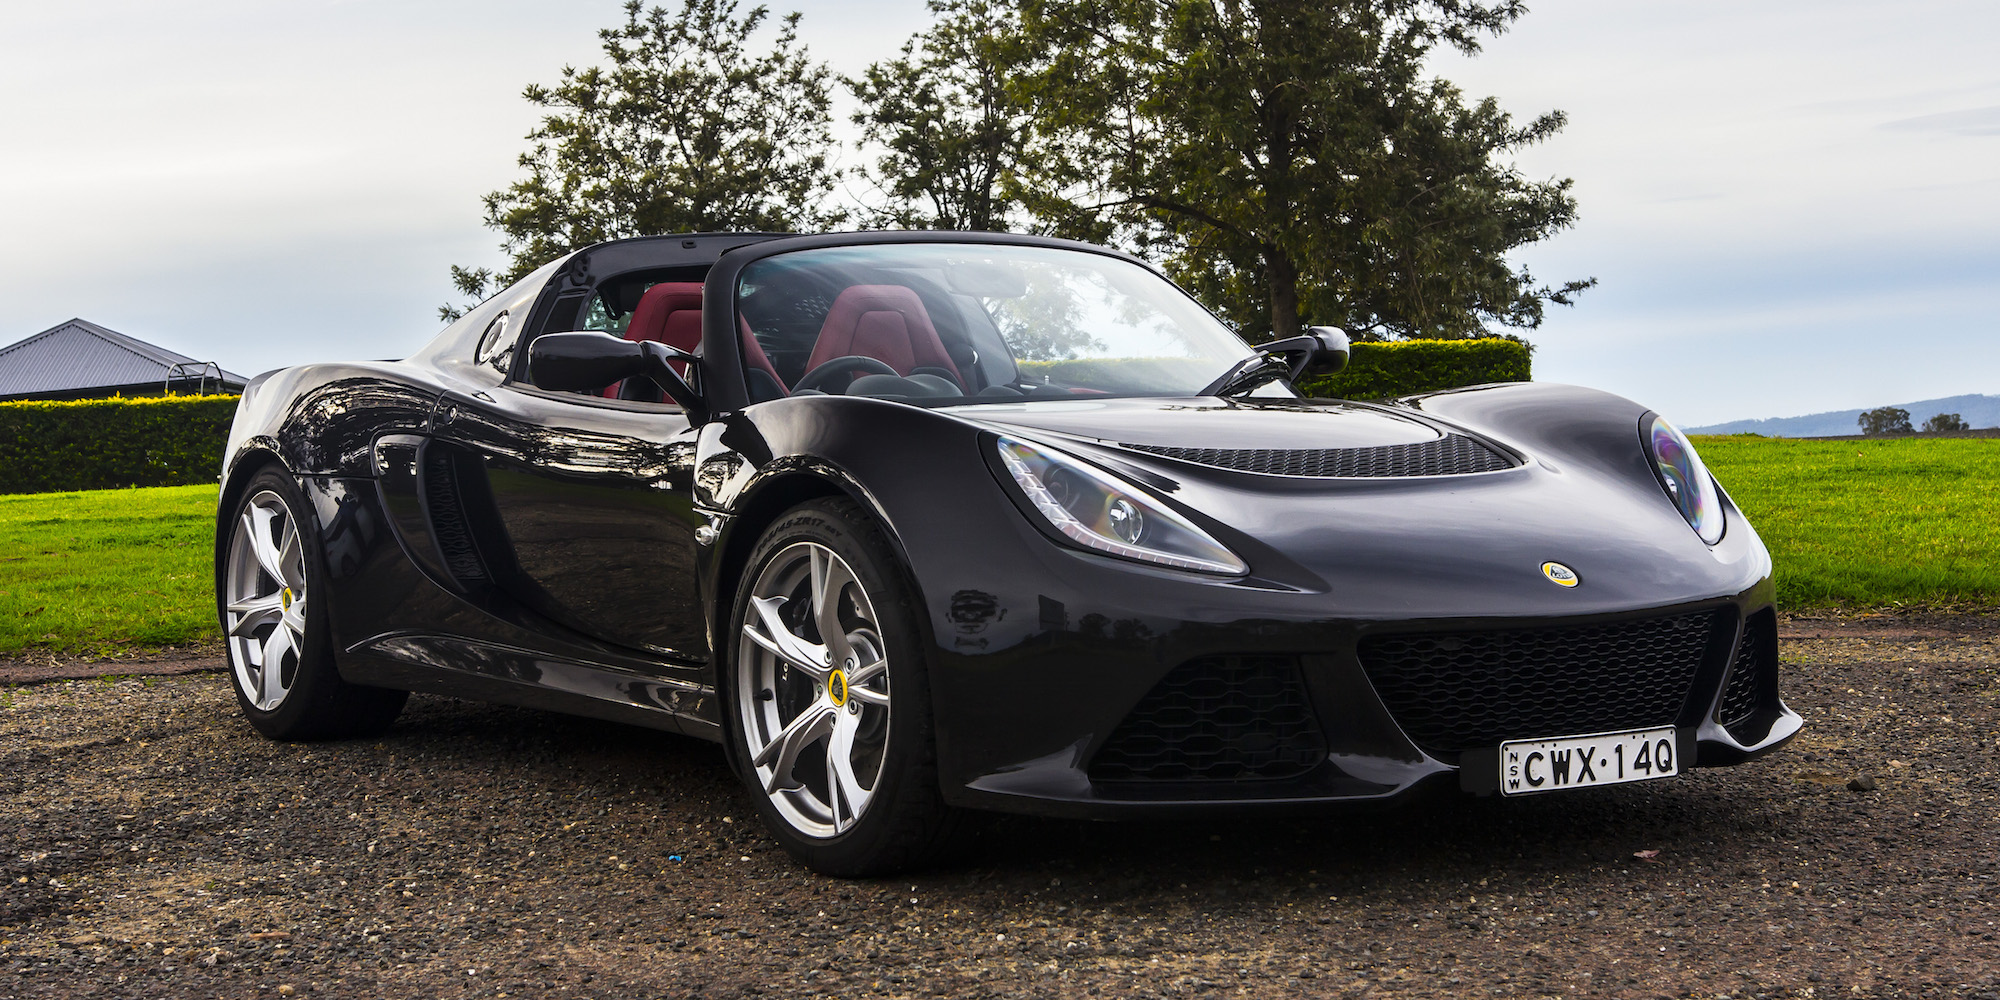 2015 Lotus Exige S Review - Photos | CarAdvice